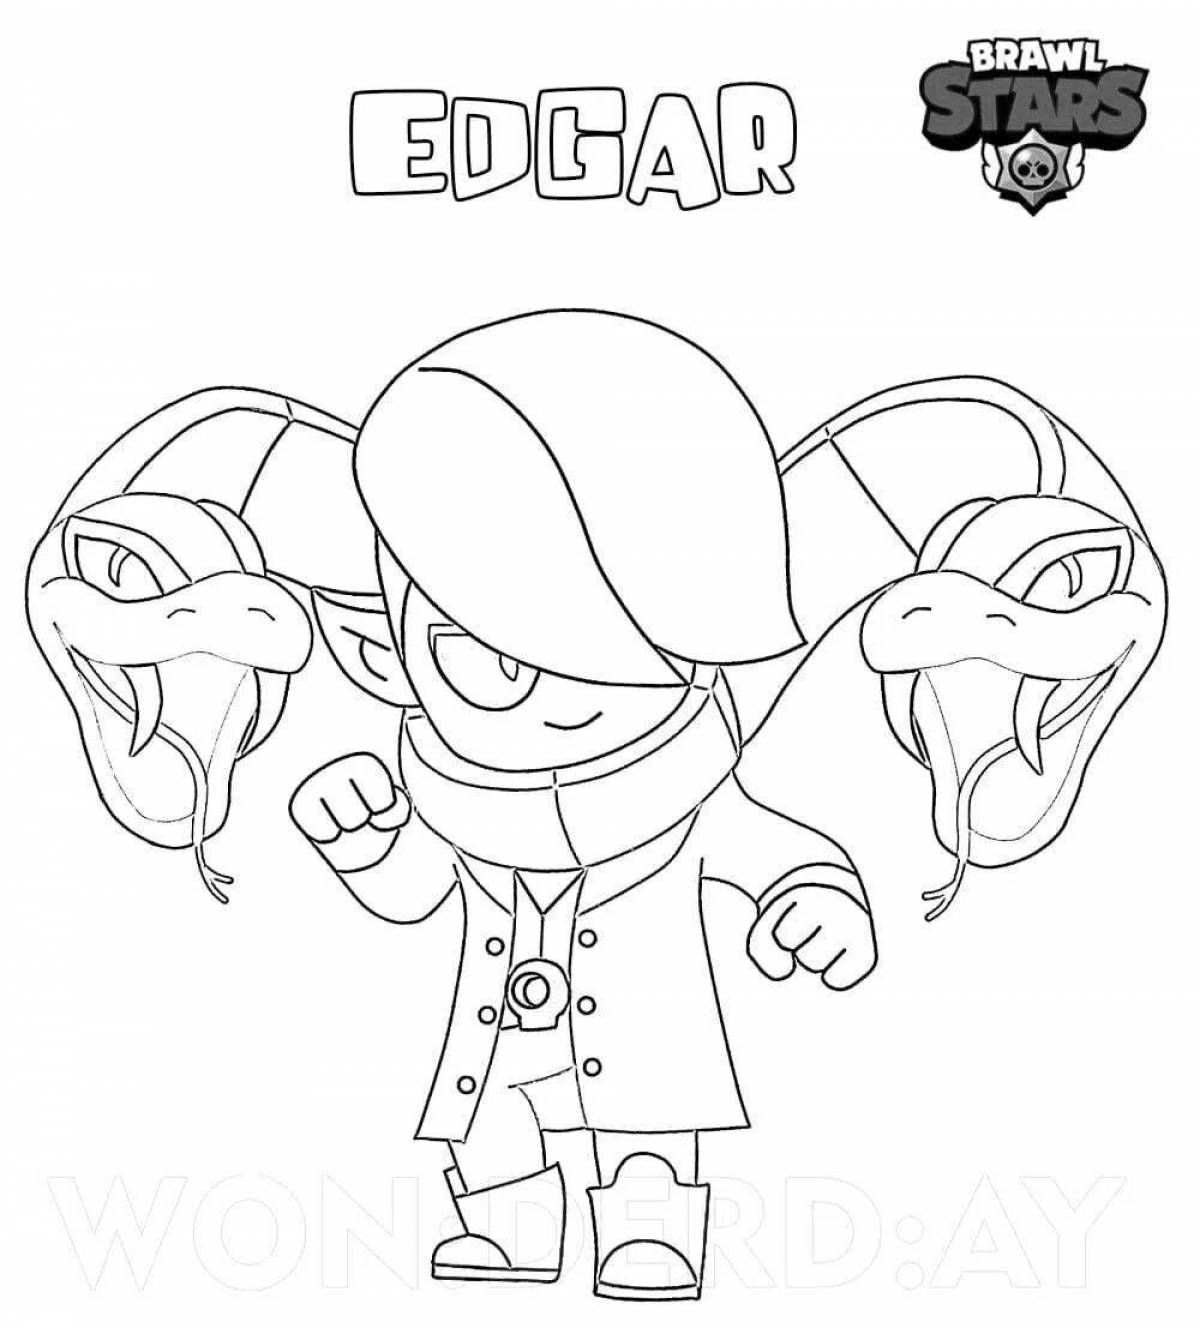 Edgar from brawl stars edgar